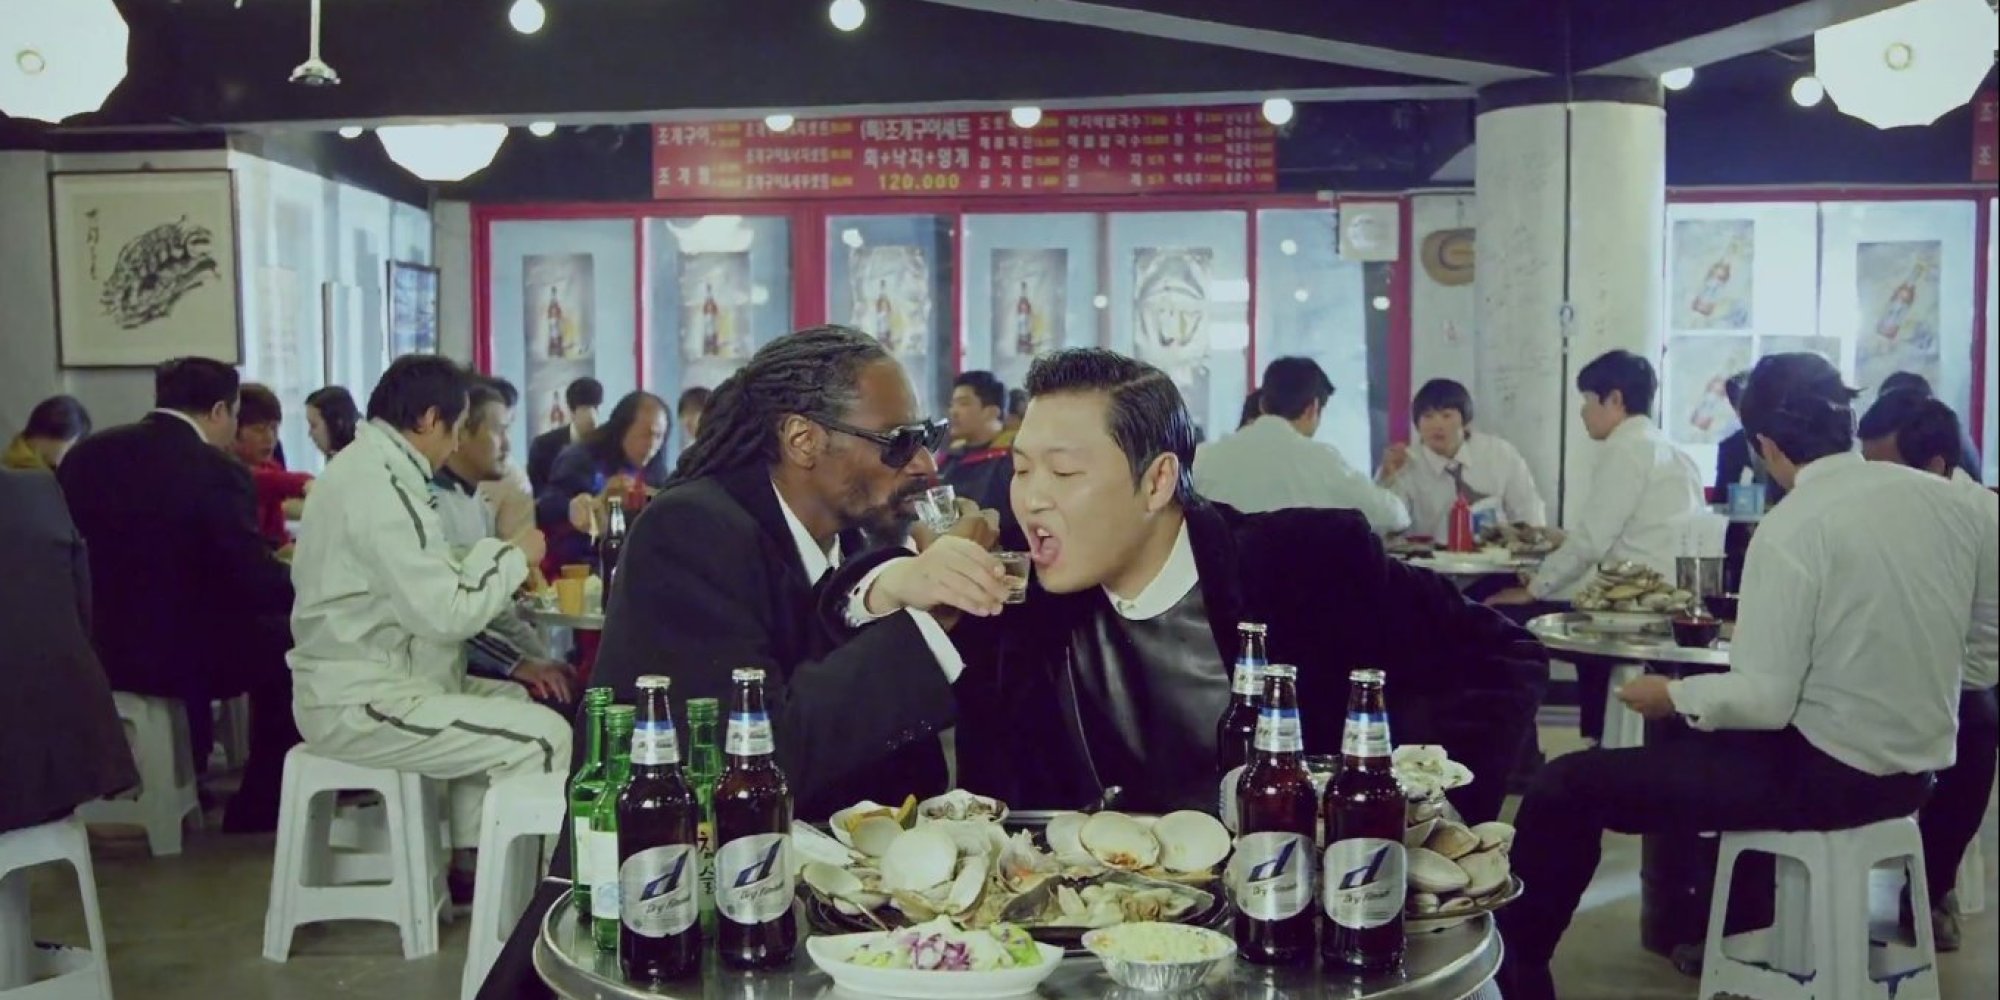 Shows: PSY está de volta ao lado de Snoop Dogg no clipe de "Hangover"